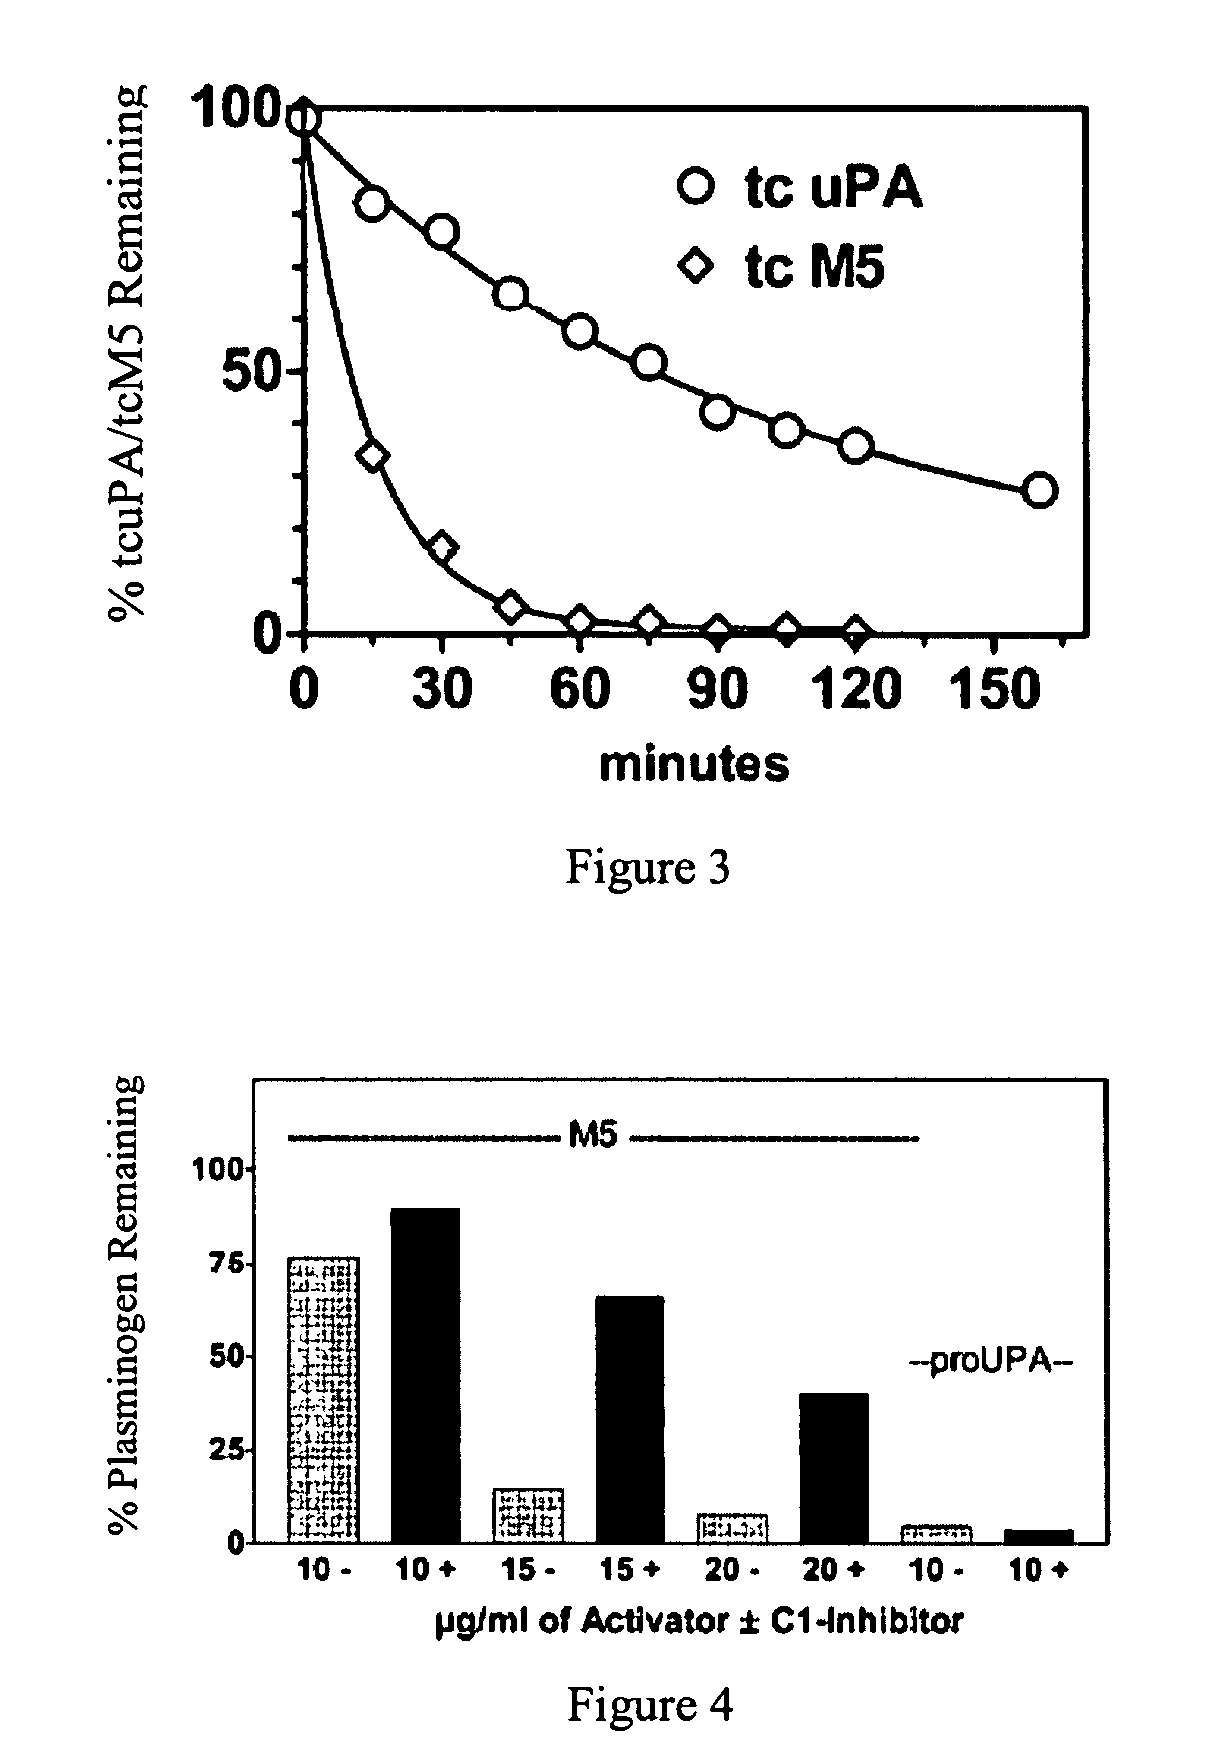 C-1 inhibitor prevents non-specific plasminogen activation by a prourokinase mutant without impeding fibrin-specific fibrinolysis